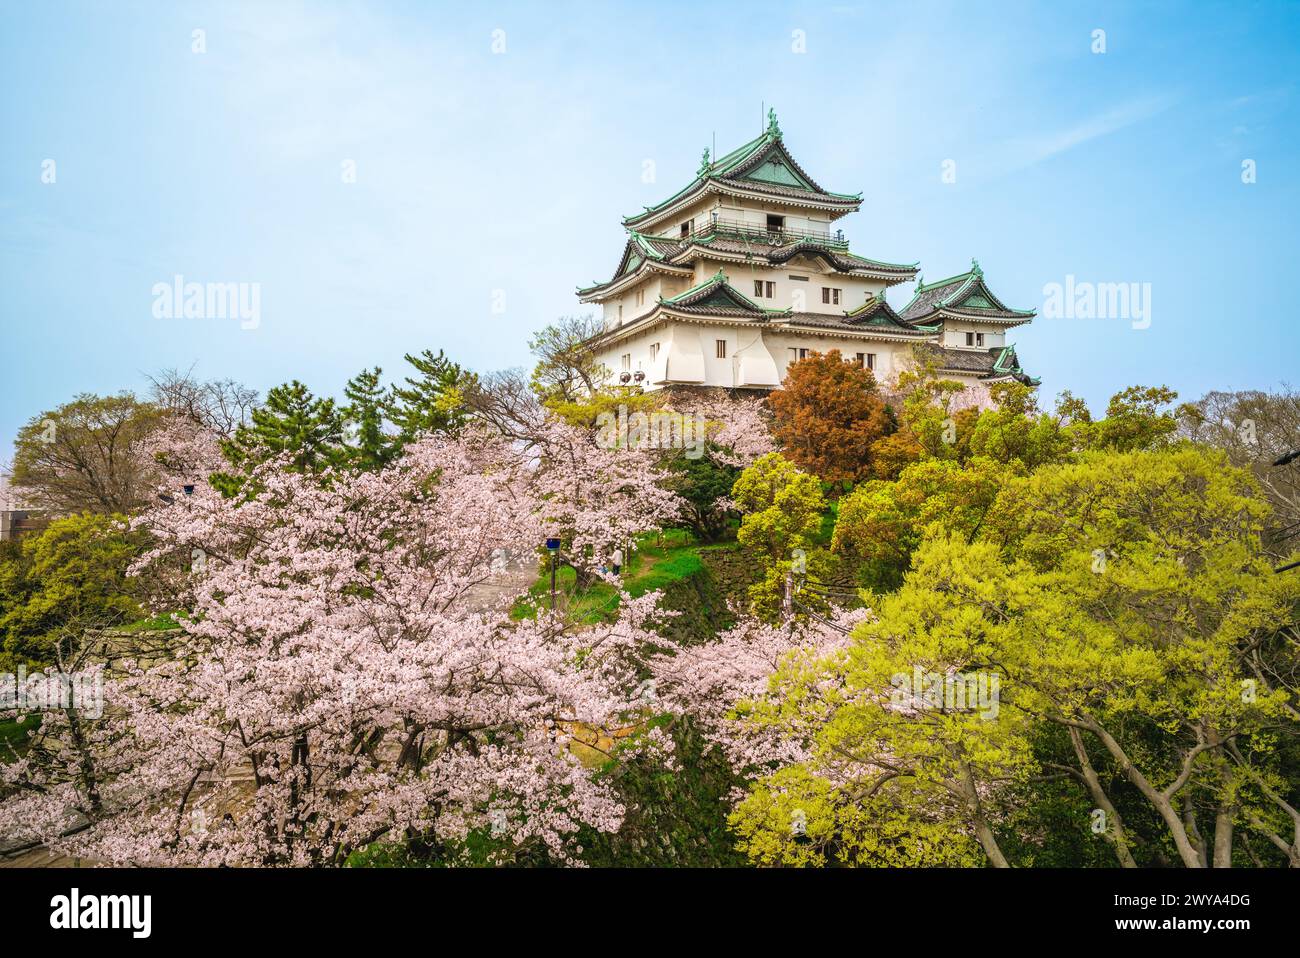 Wakayama Castle, a Japanese castle located in Wakayama city, Wakayama Prefecture, Japan. Stock Photo